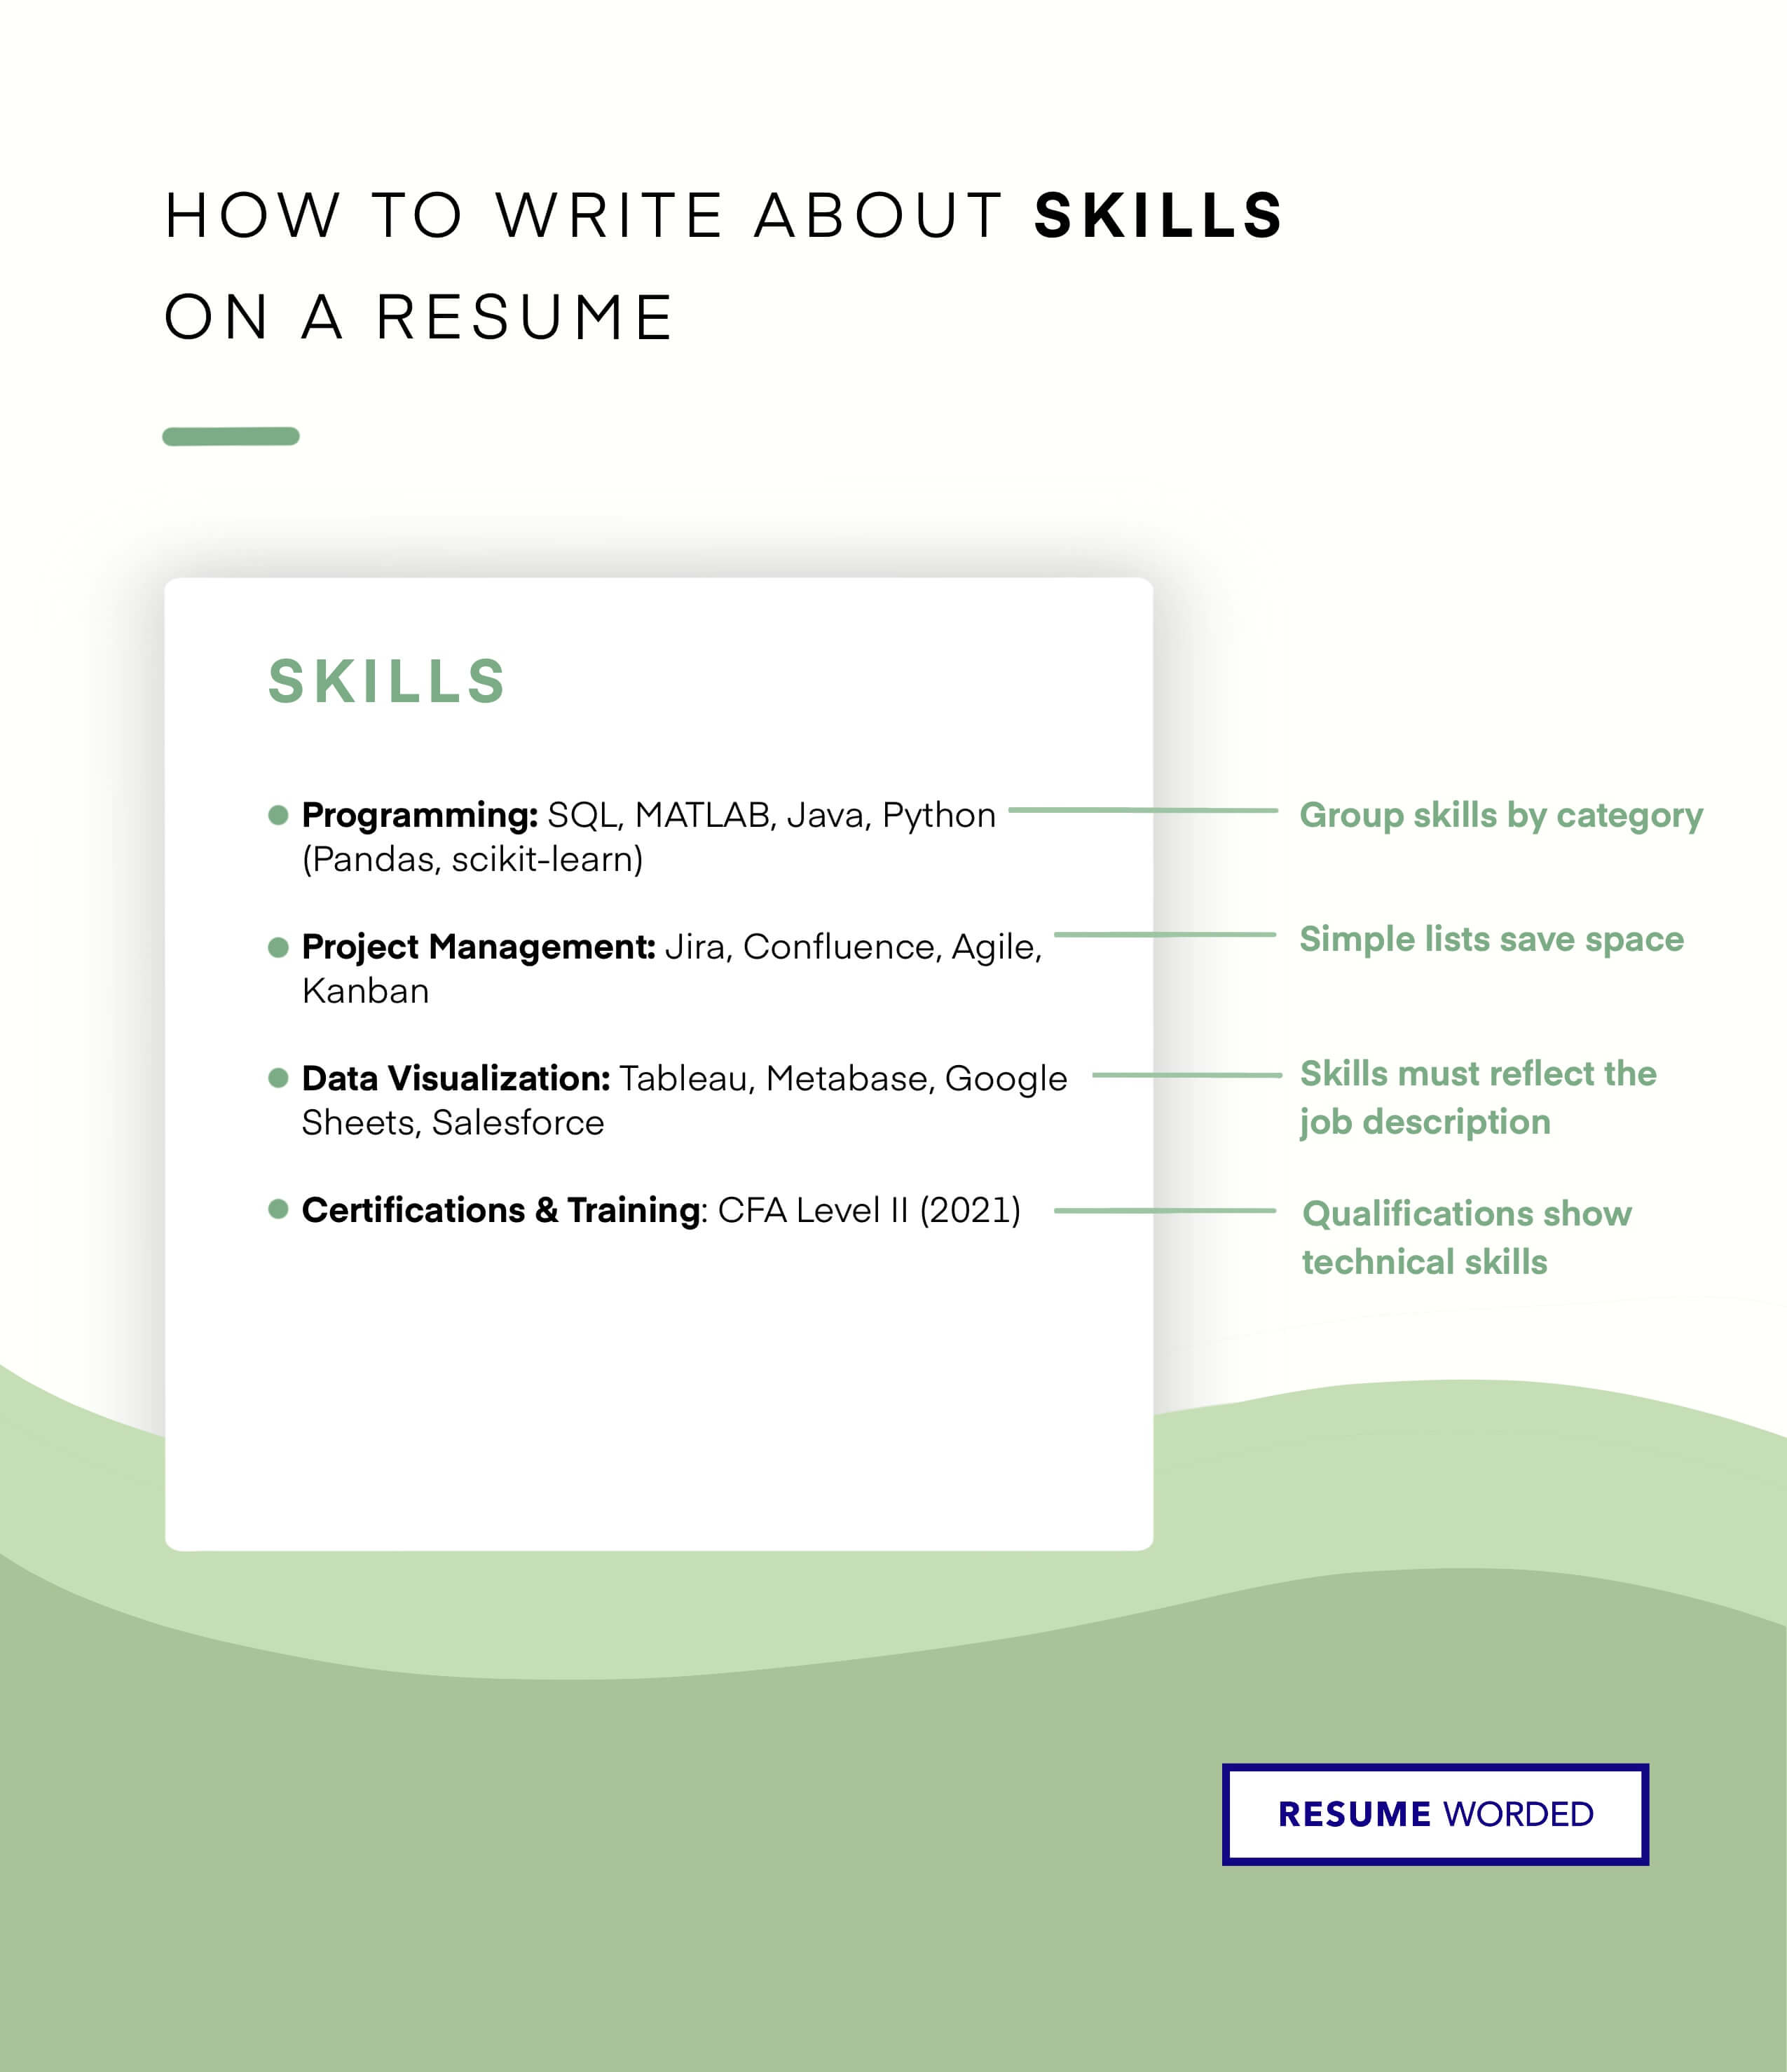 Emphasize problem-solving skills - Junior Full Stack Developer CV